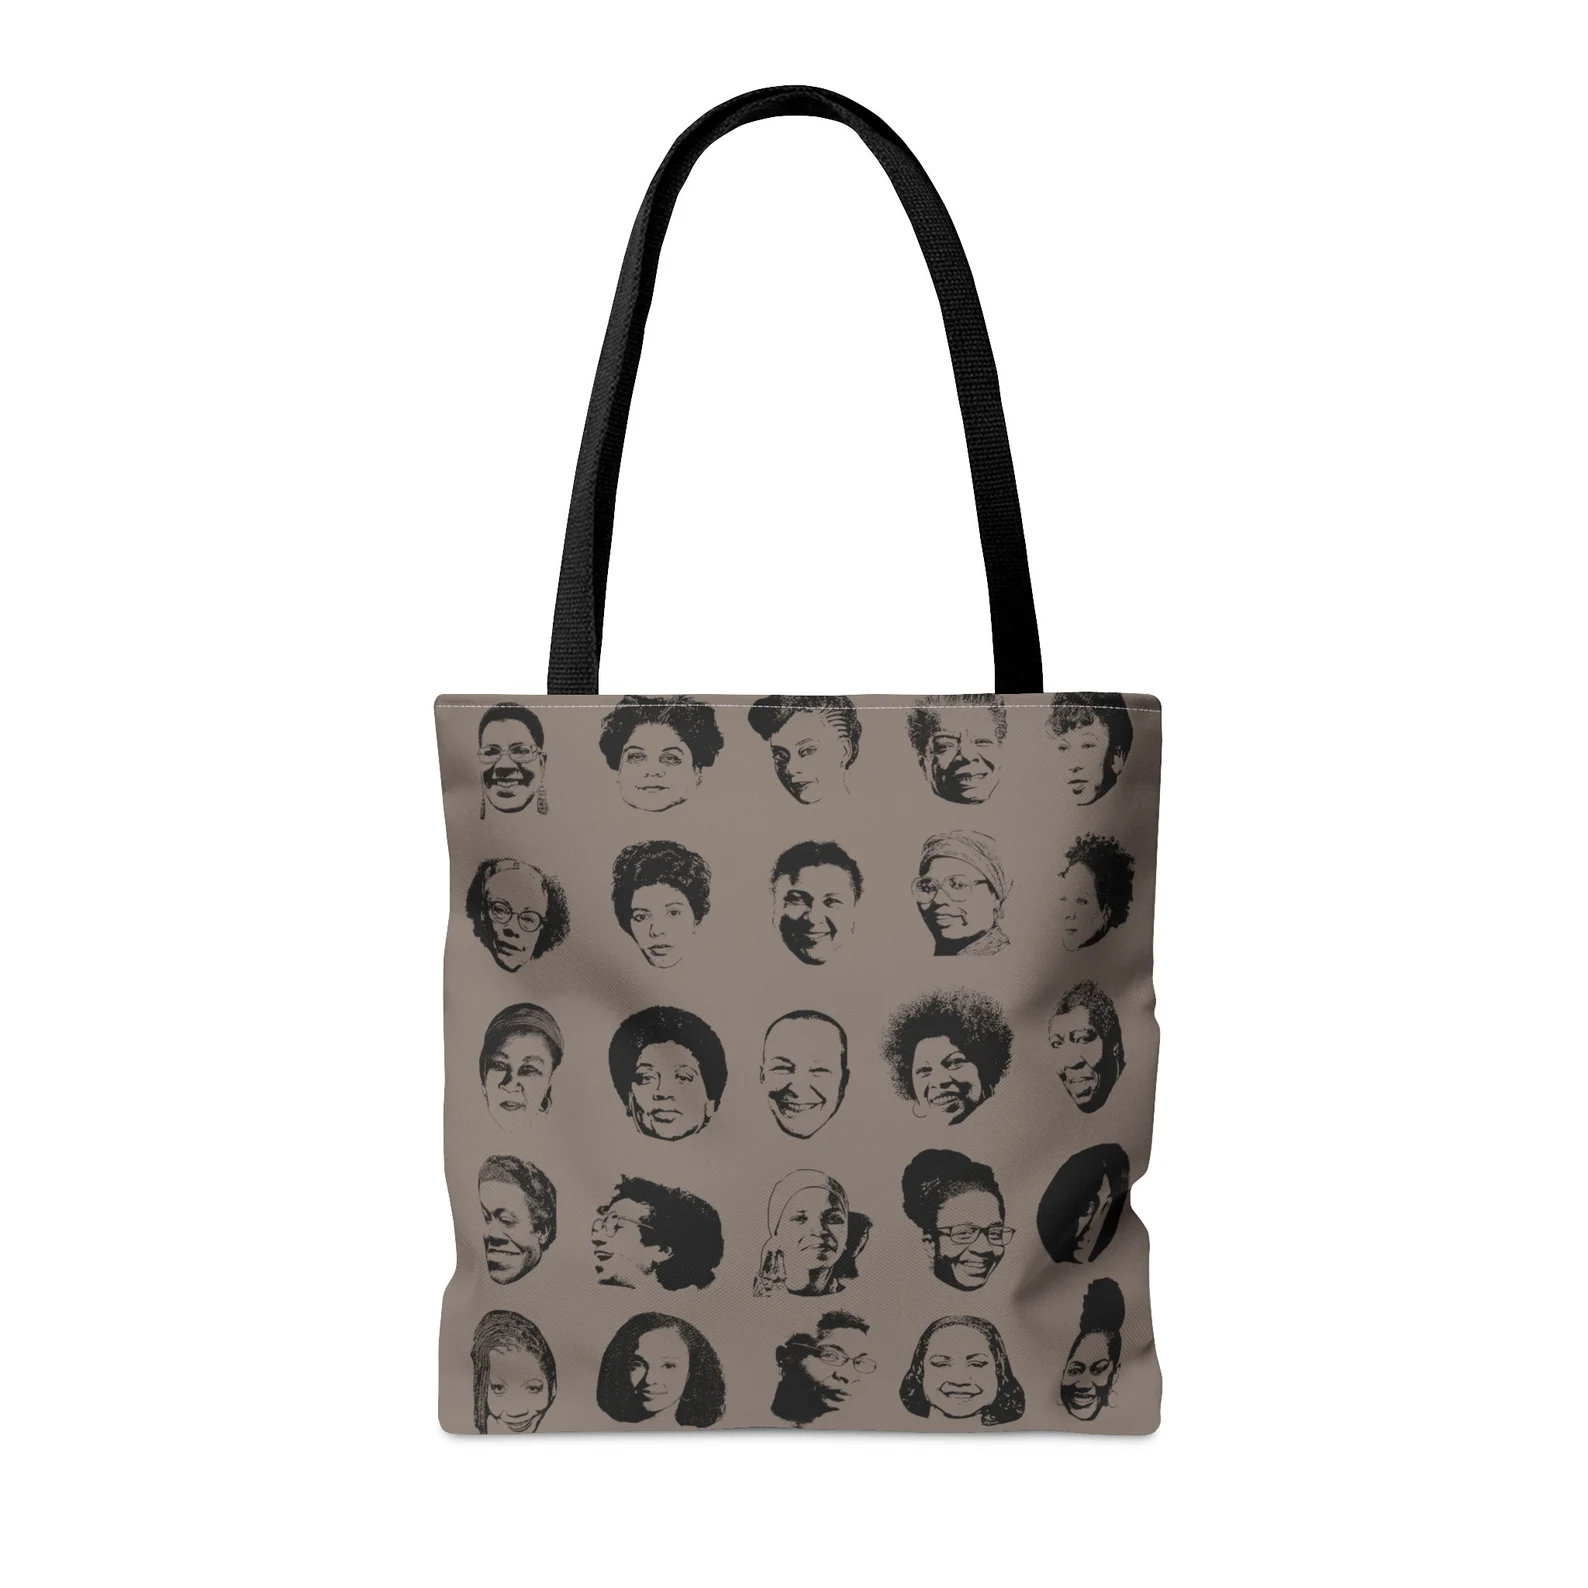 Black Women Writers tote bag